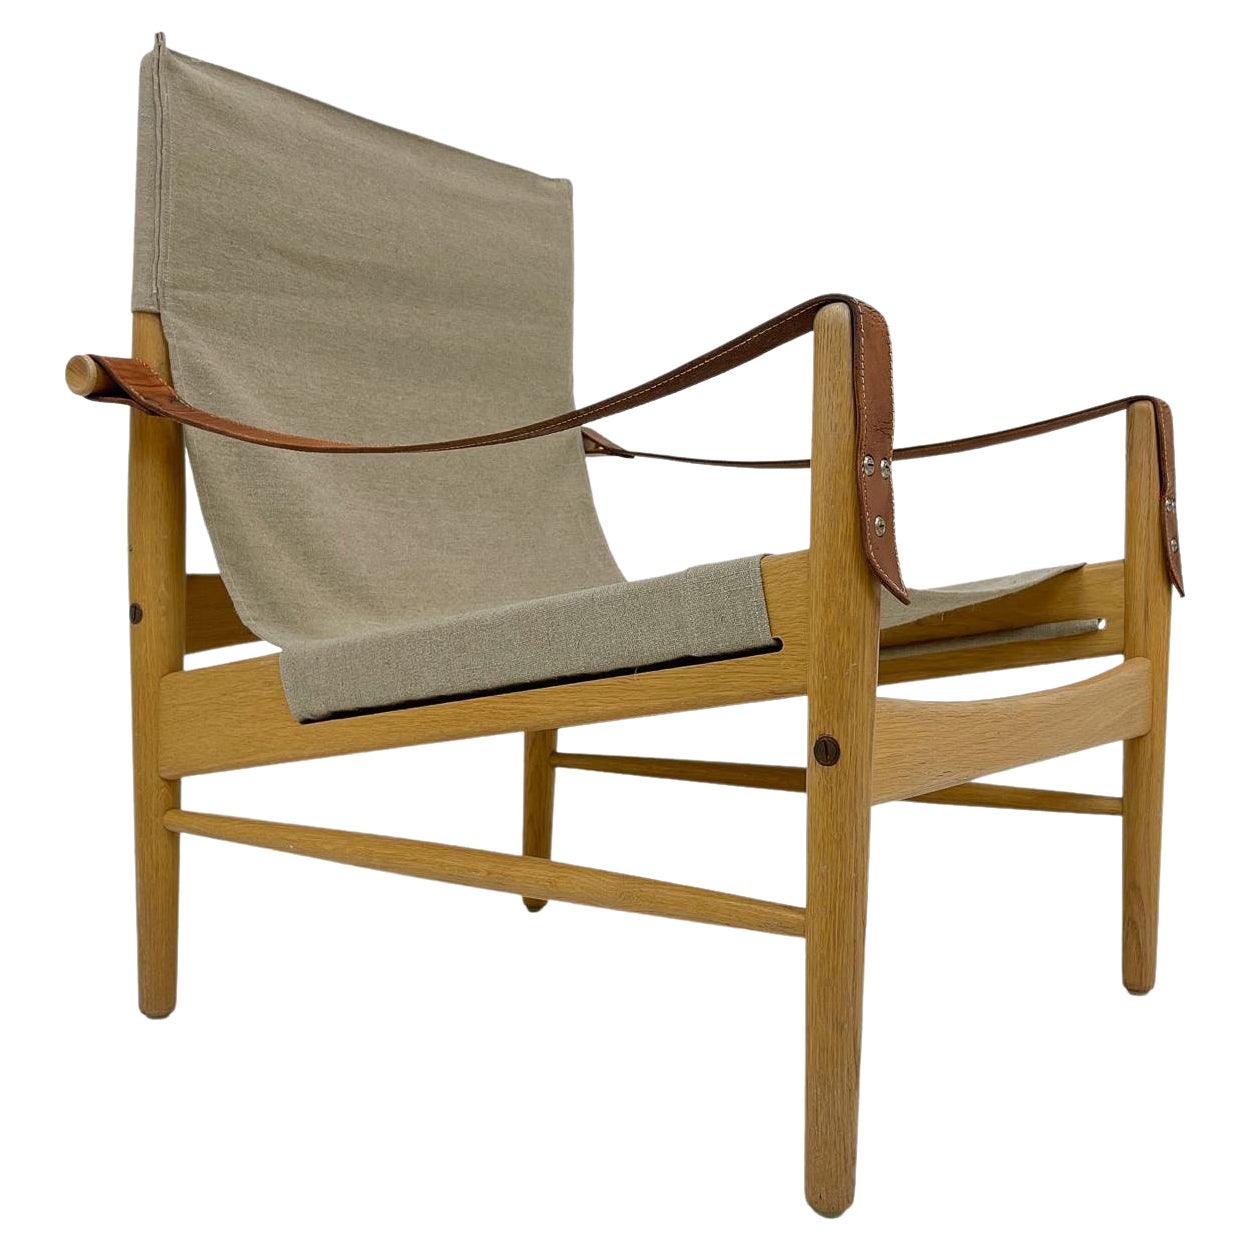 Mid-Century Lounge Chair Hans Olsen ”Gazelle” Chair, 1960s Sweden